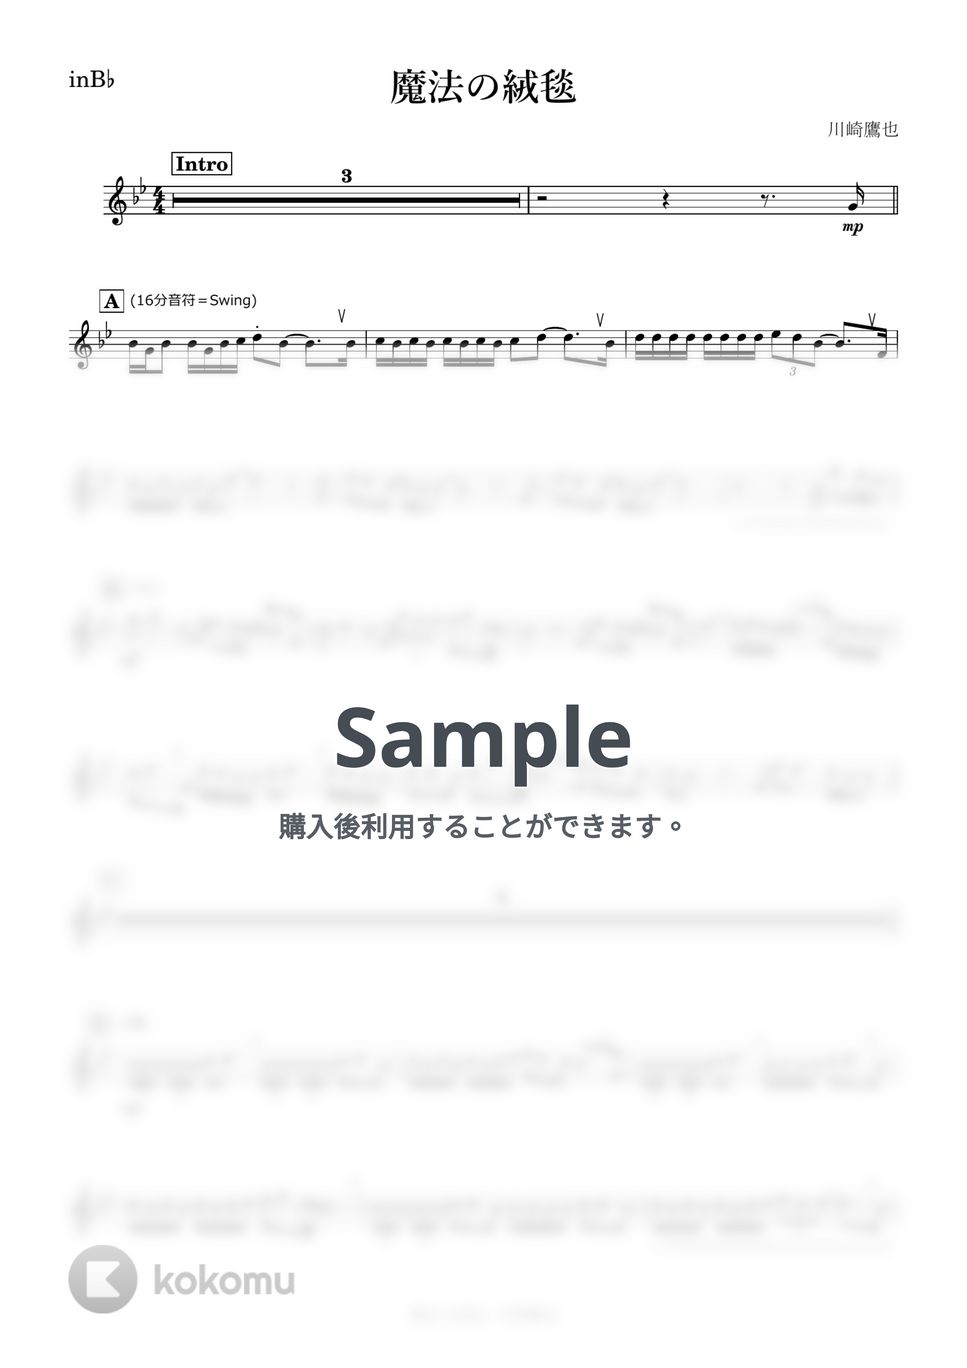 川崎鷹也 - 魔法の絨毯 (B♭) by kanamusic